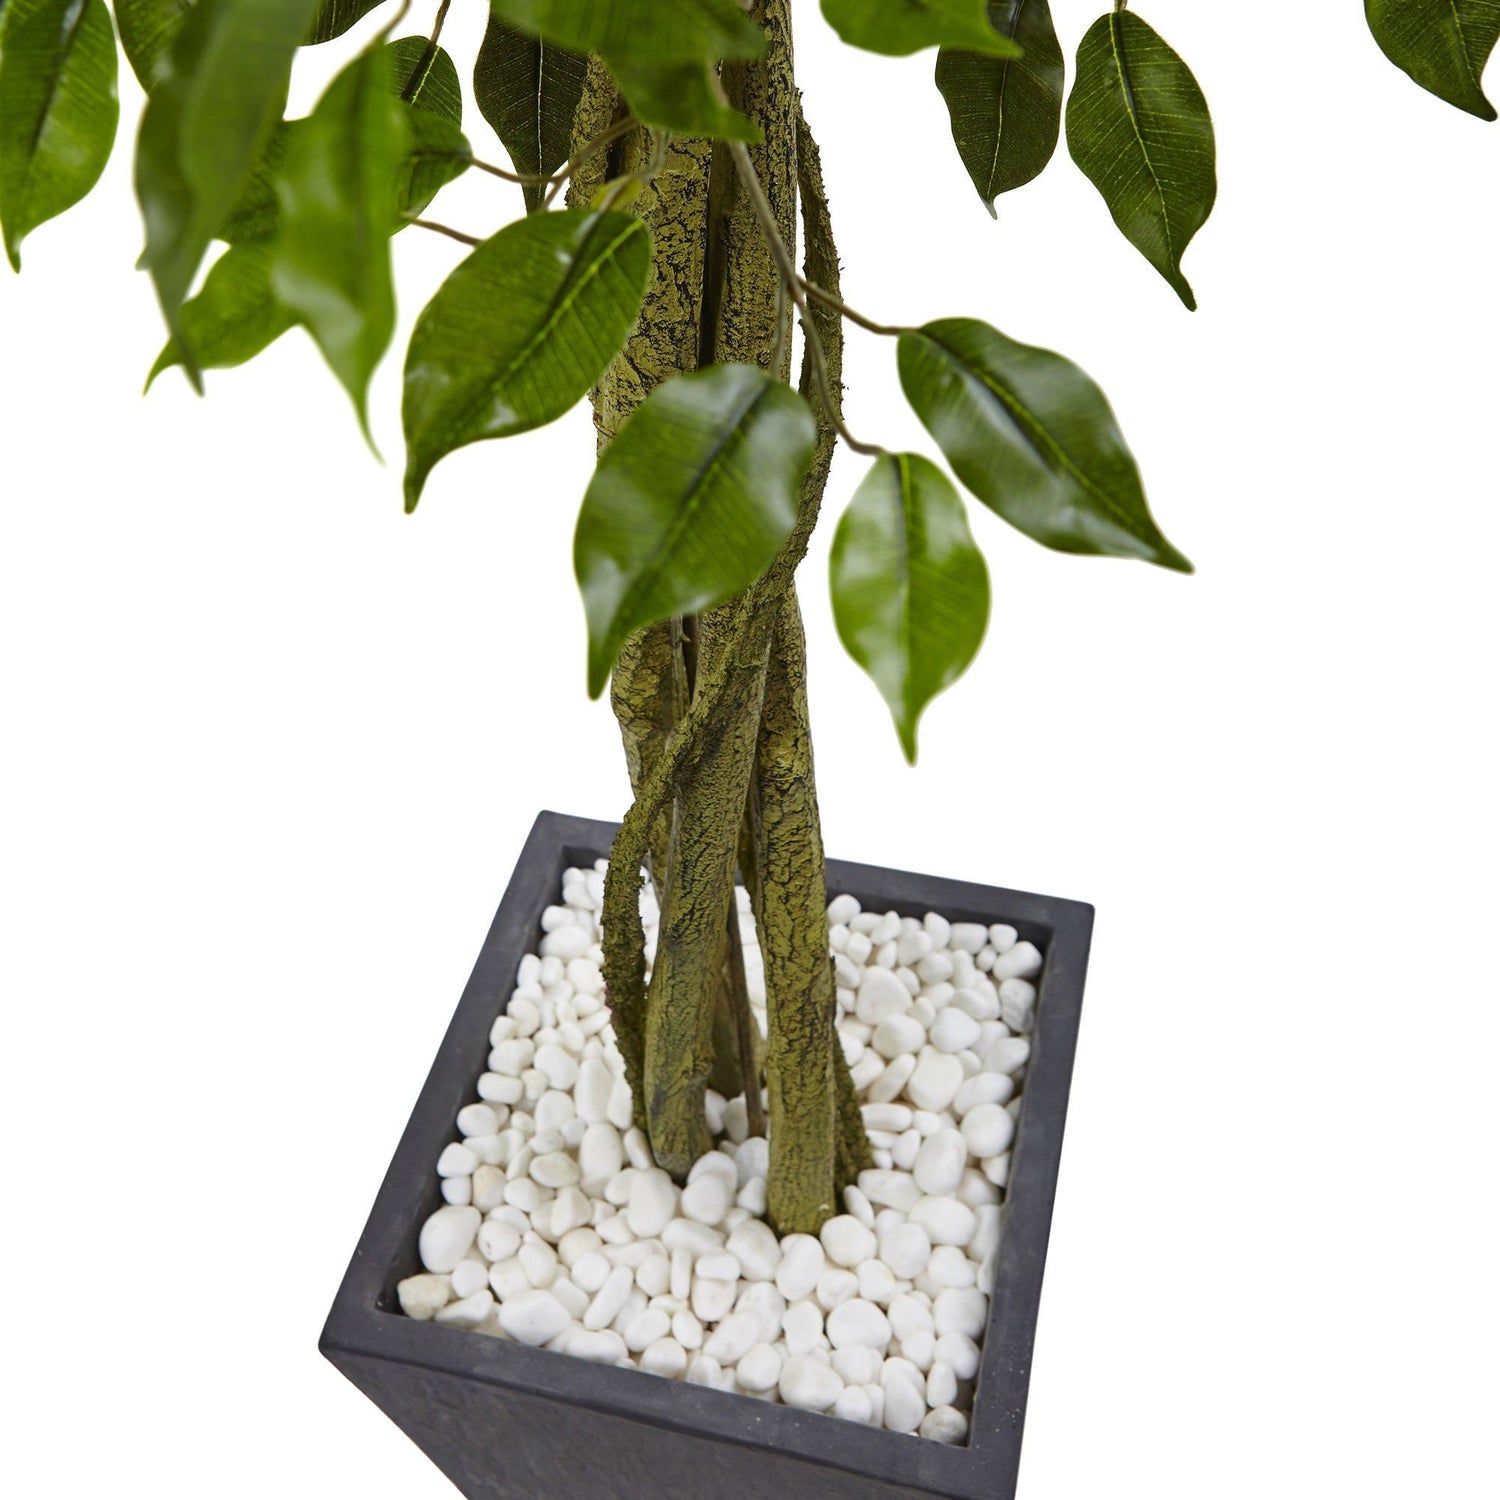 6' Ficus Tree with Slate Planter UV Resistant (Indoor Outdoor)